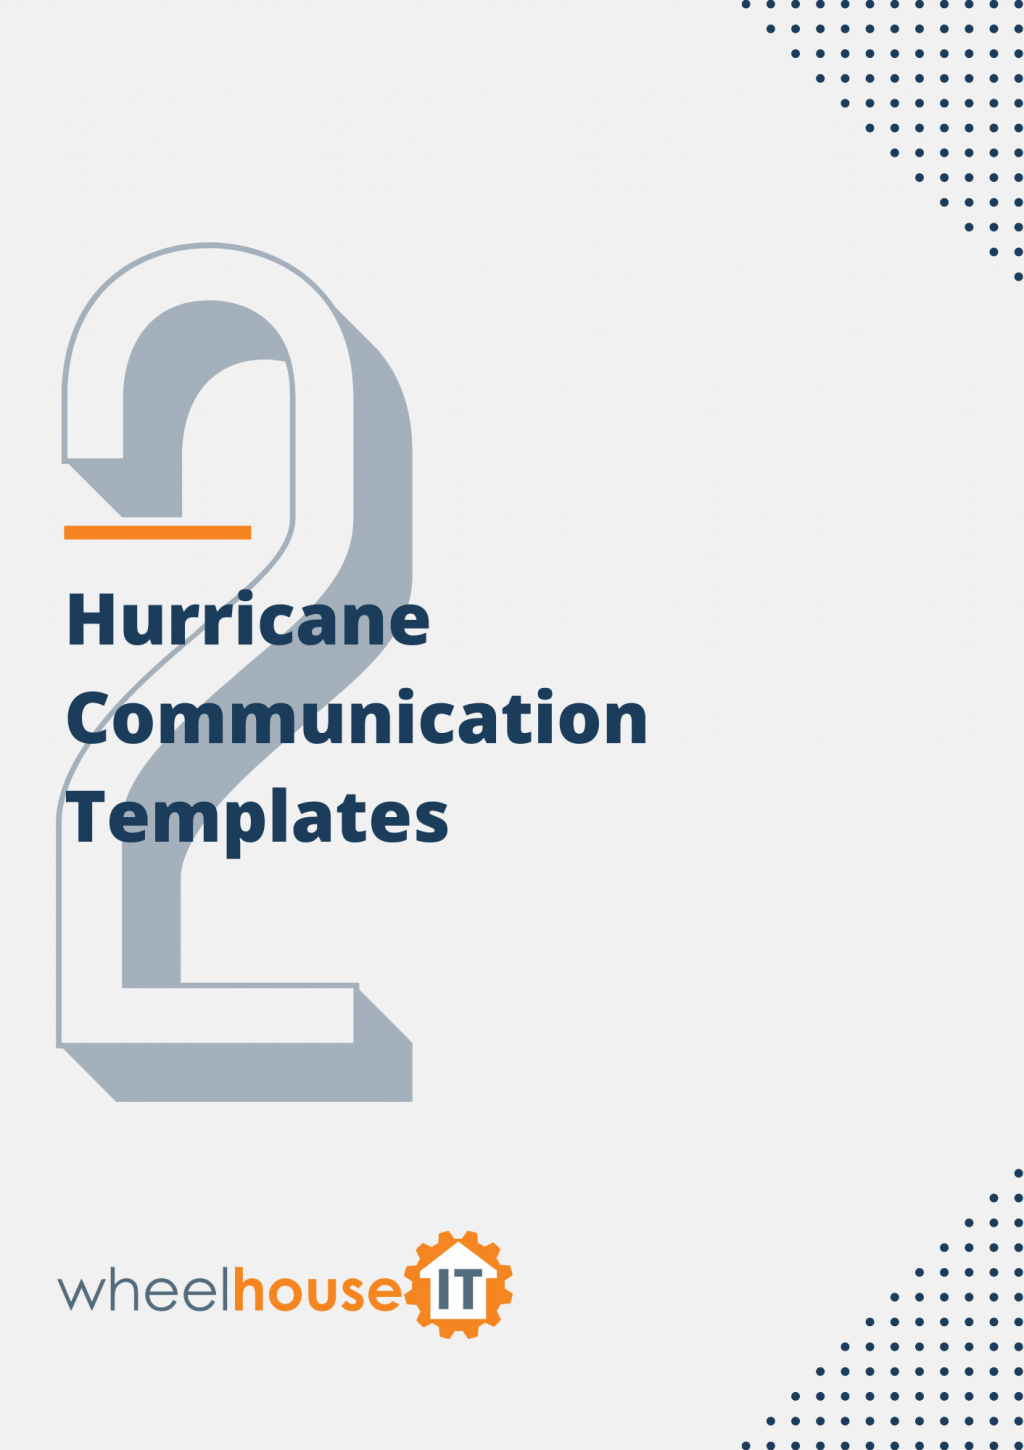 Hurricane Communication